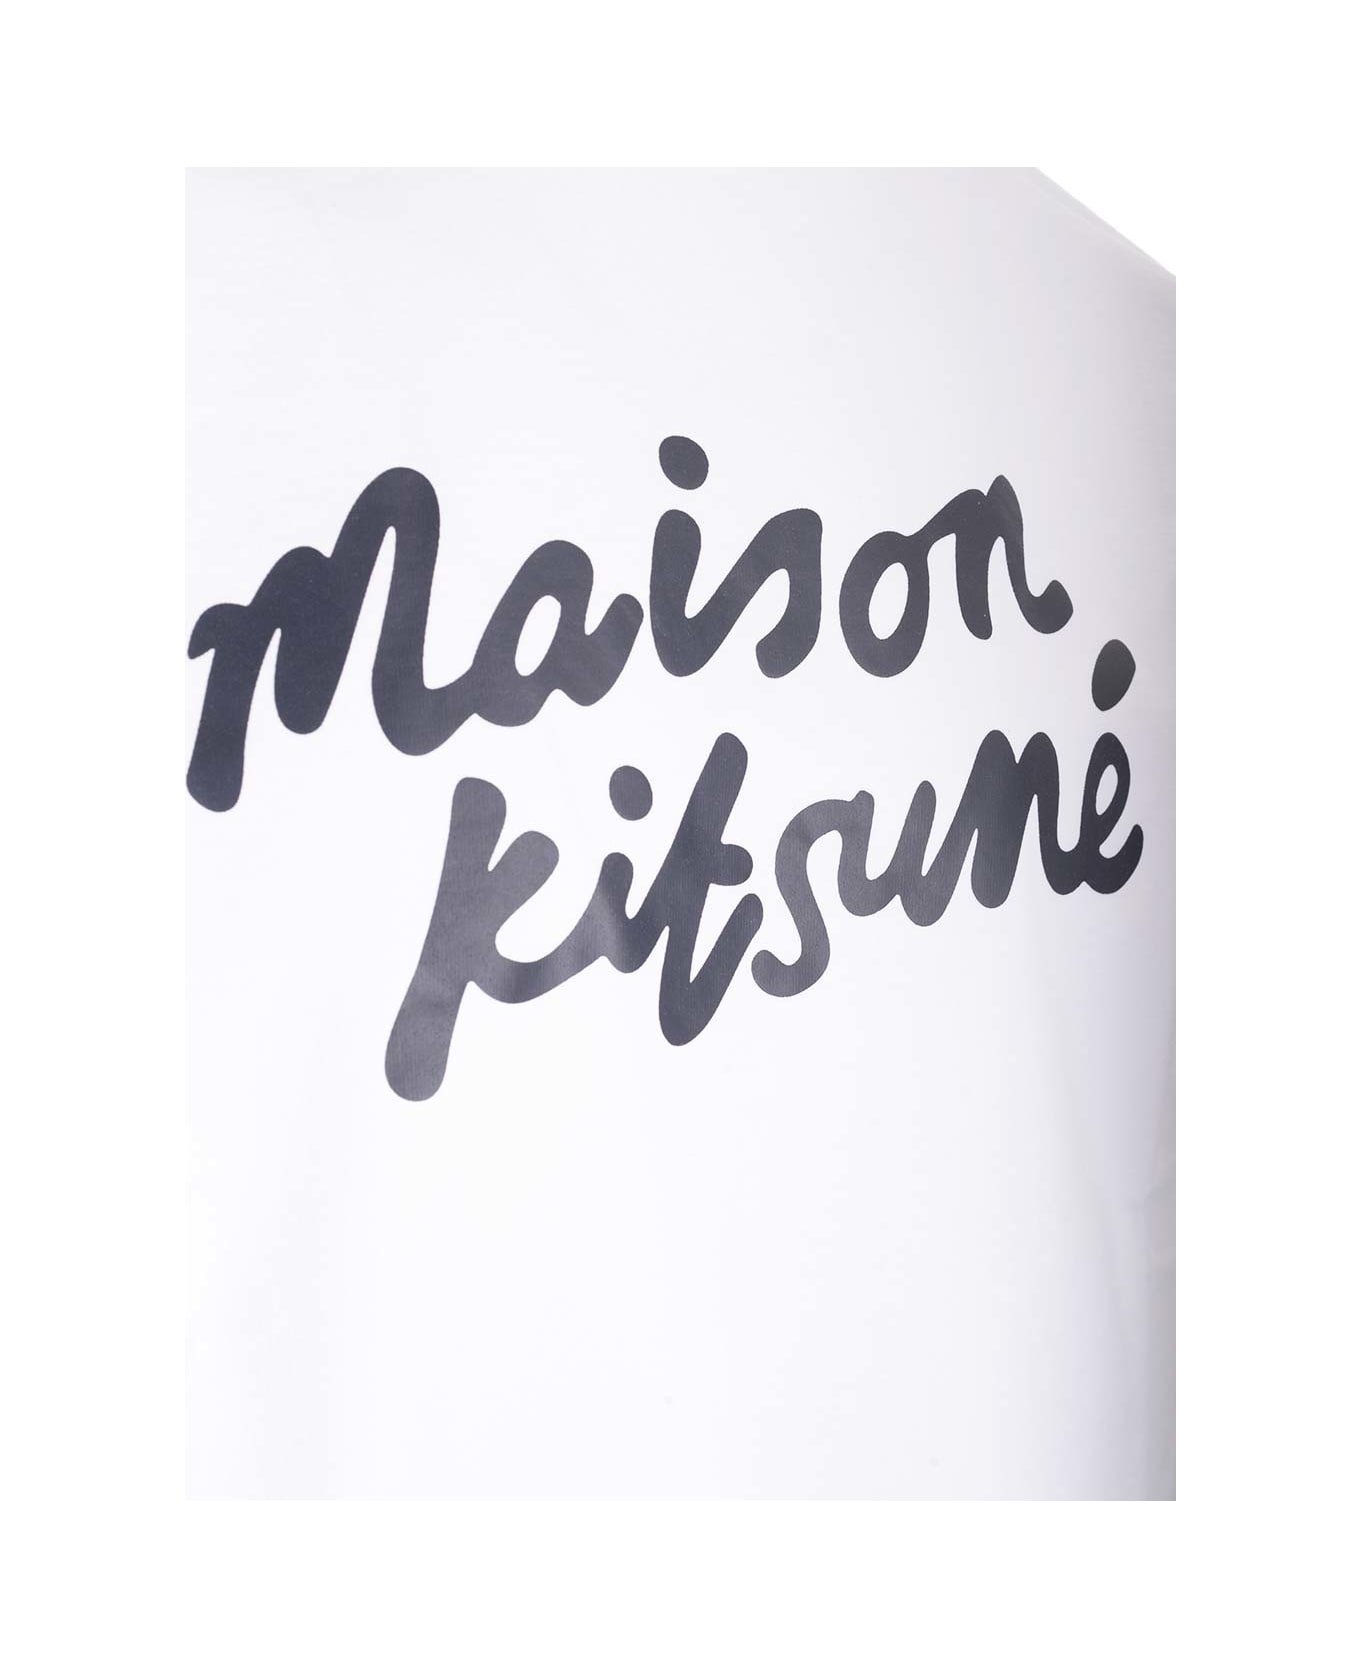 Maison Kitsuné Signature T-shirt - White Black シャツ